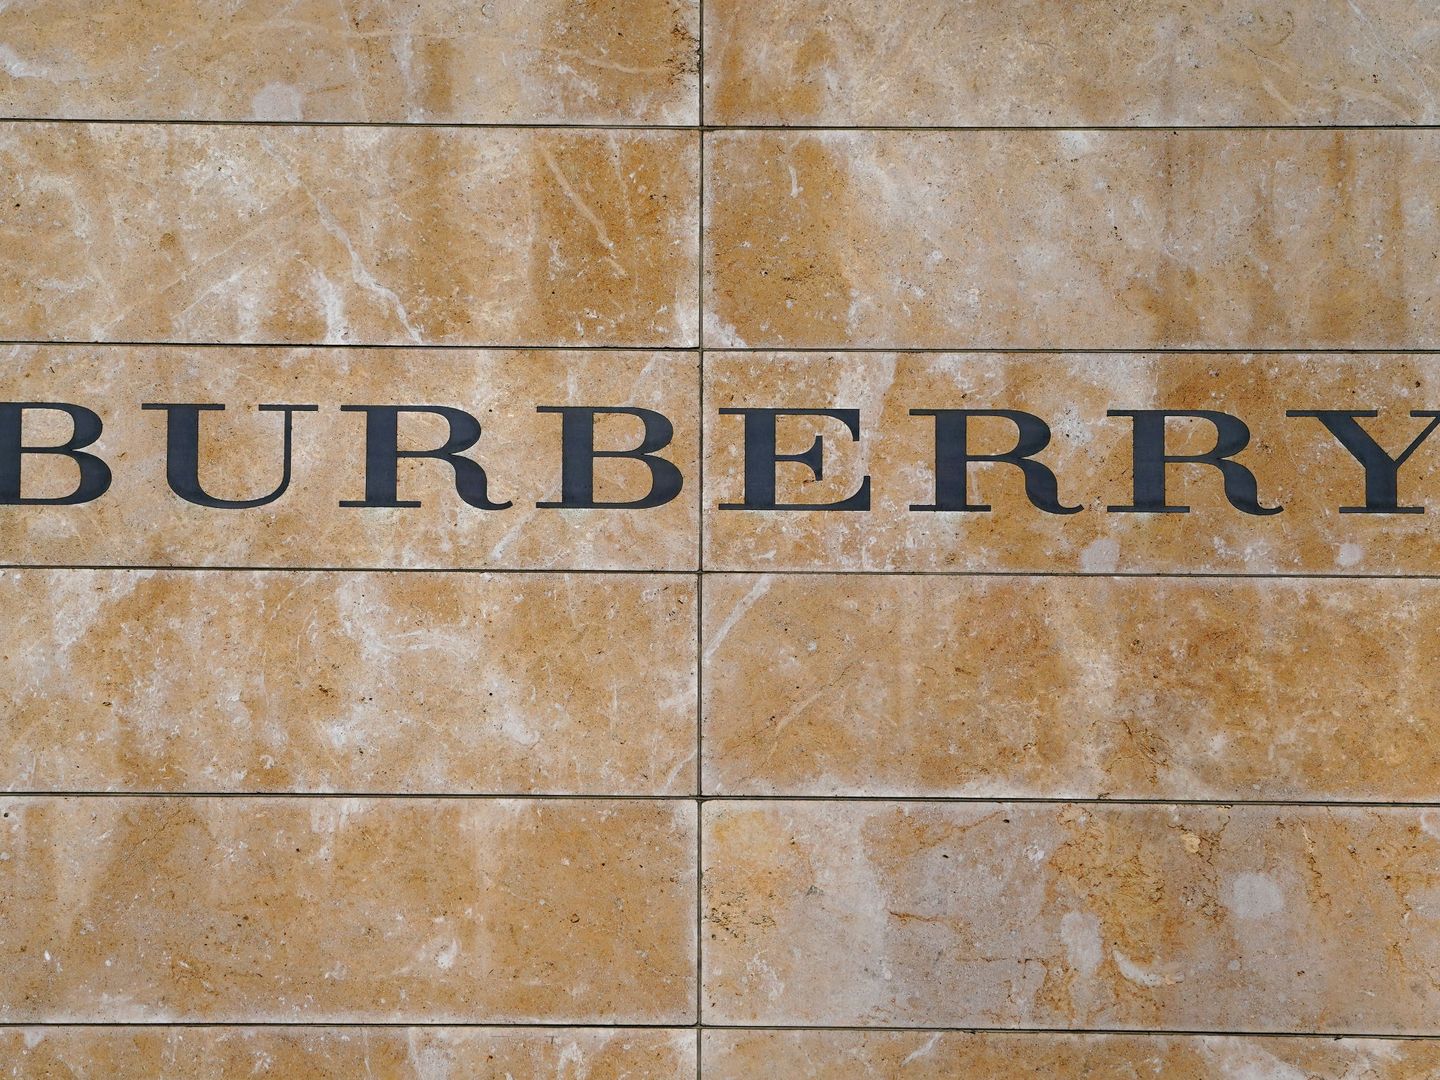 Burberry. (Reuters)